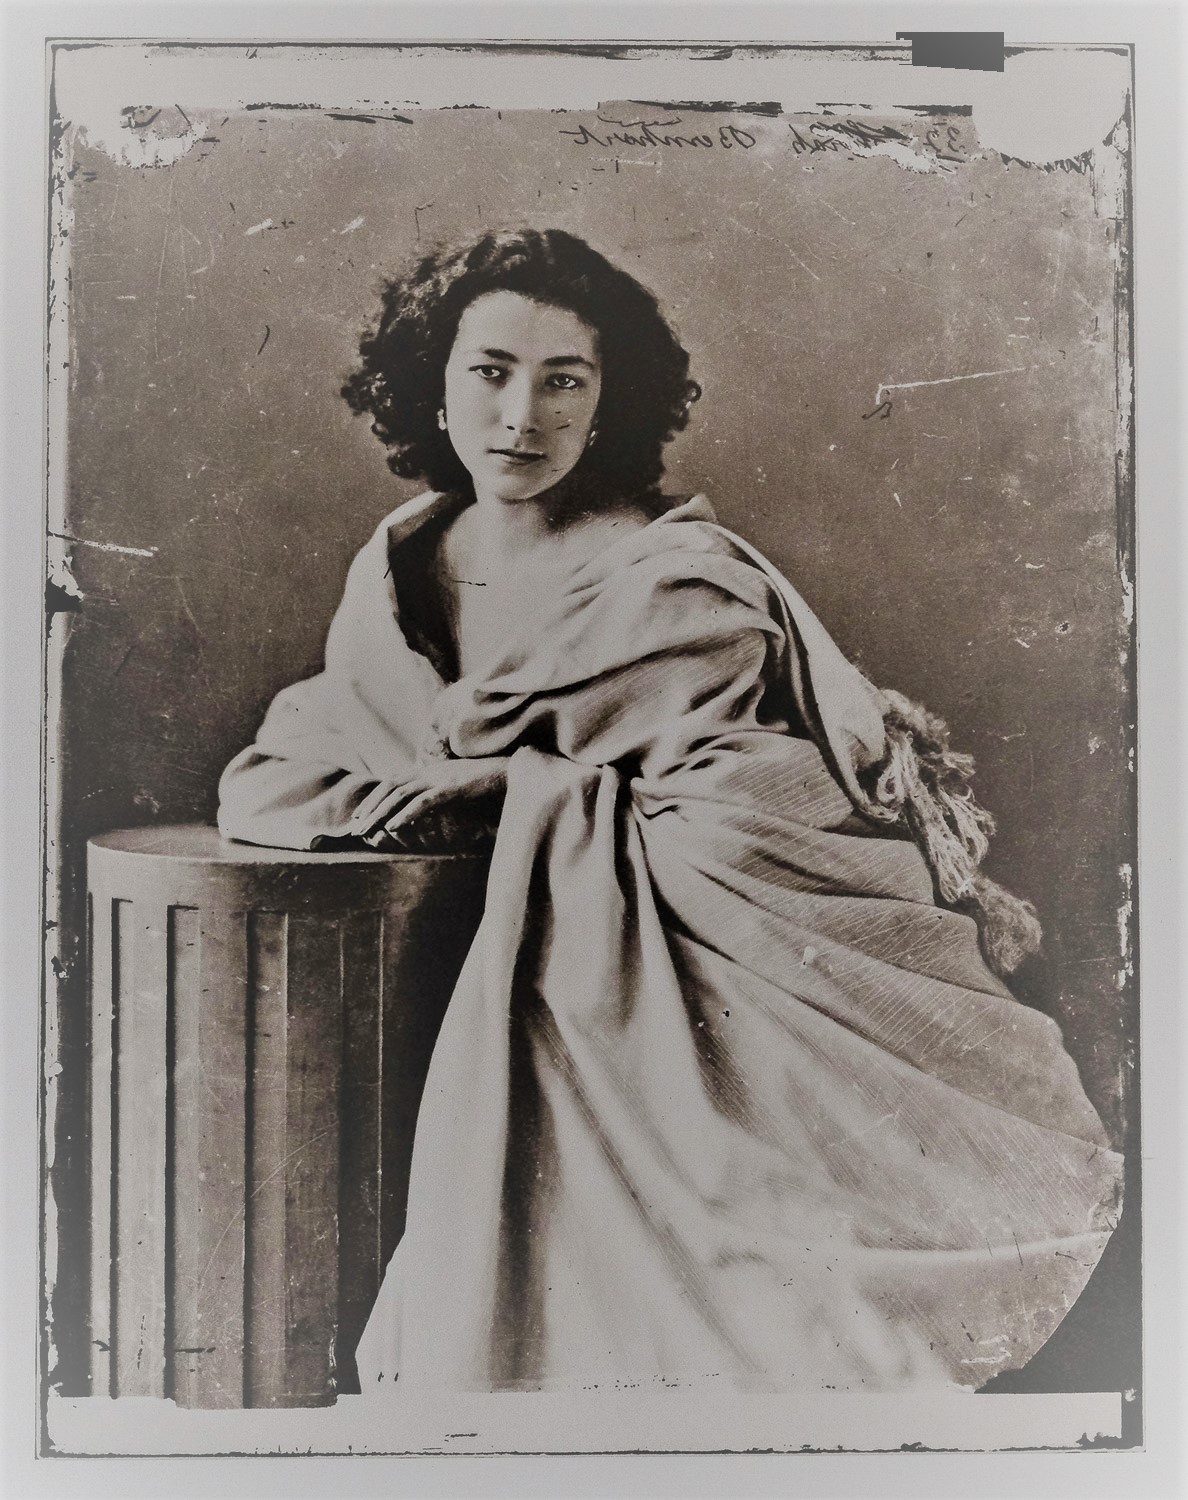 L'attrice Sarah Bernhardt